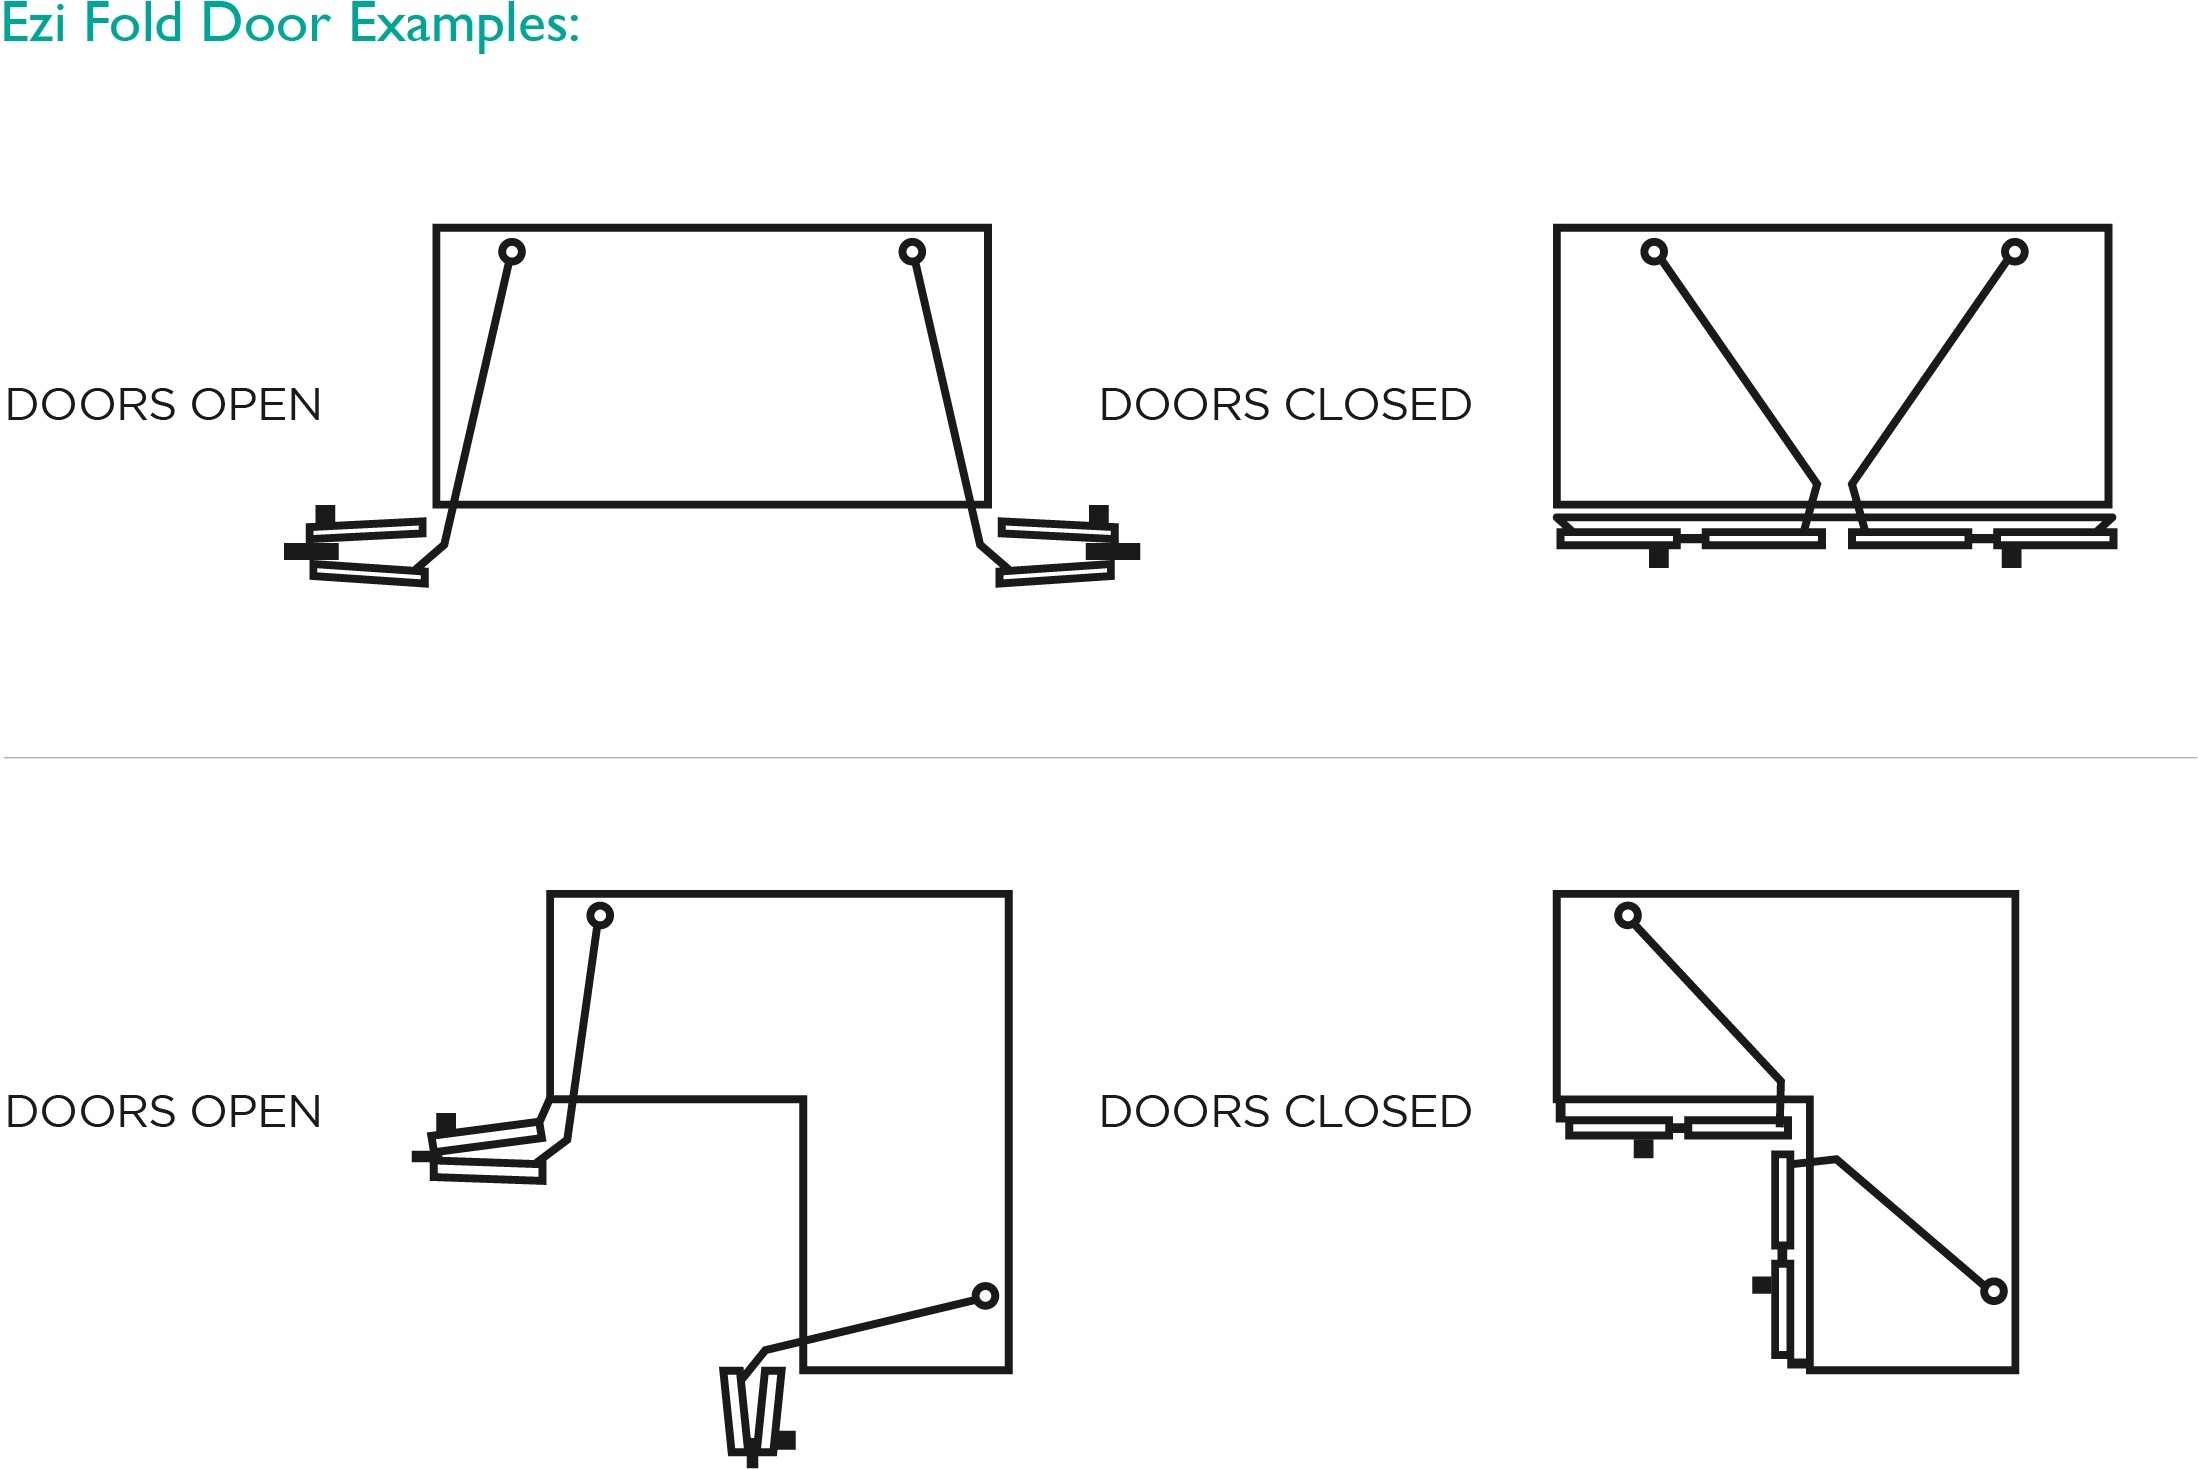 Ezi Fold Door Control Arms | Enko - Smart Systems For Design Interiors